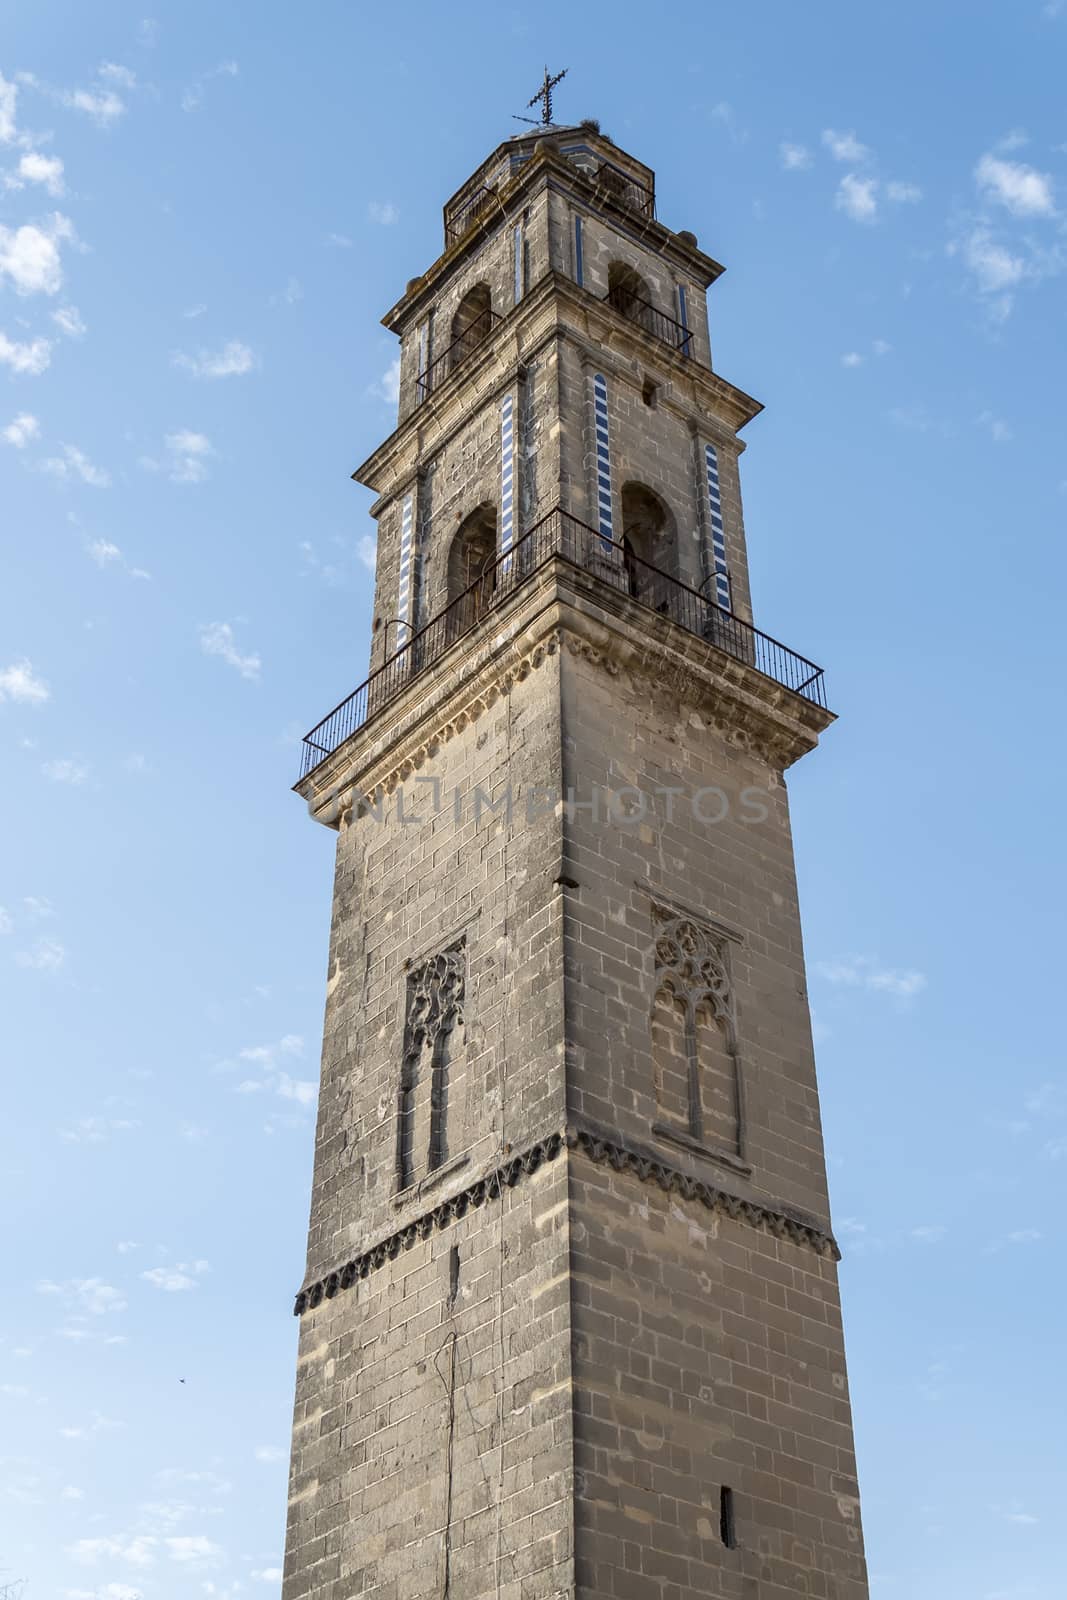 Minaret of the Jerez de la Frontera Cathedral, Spain